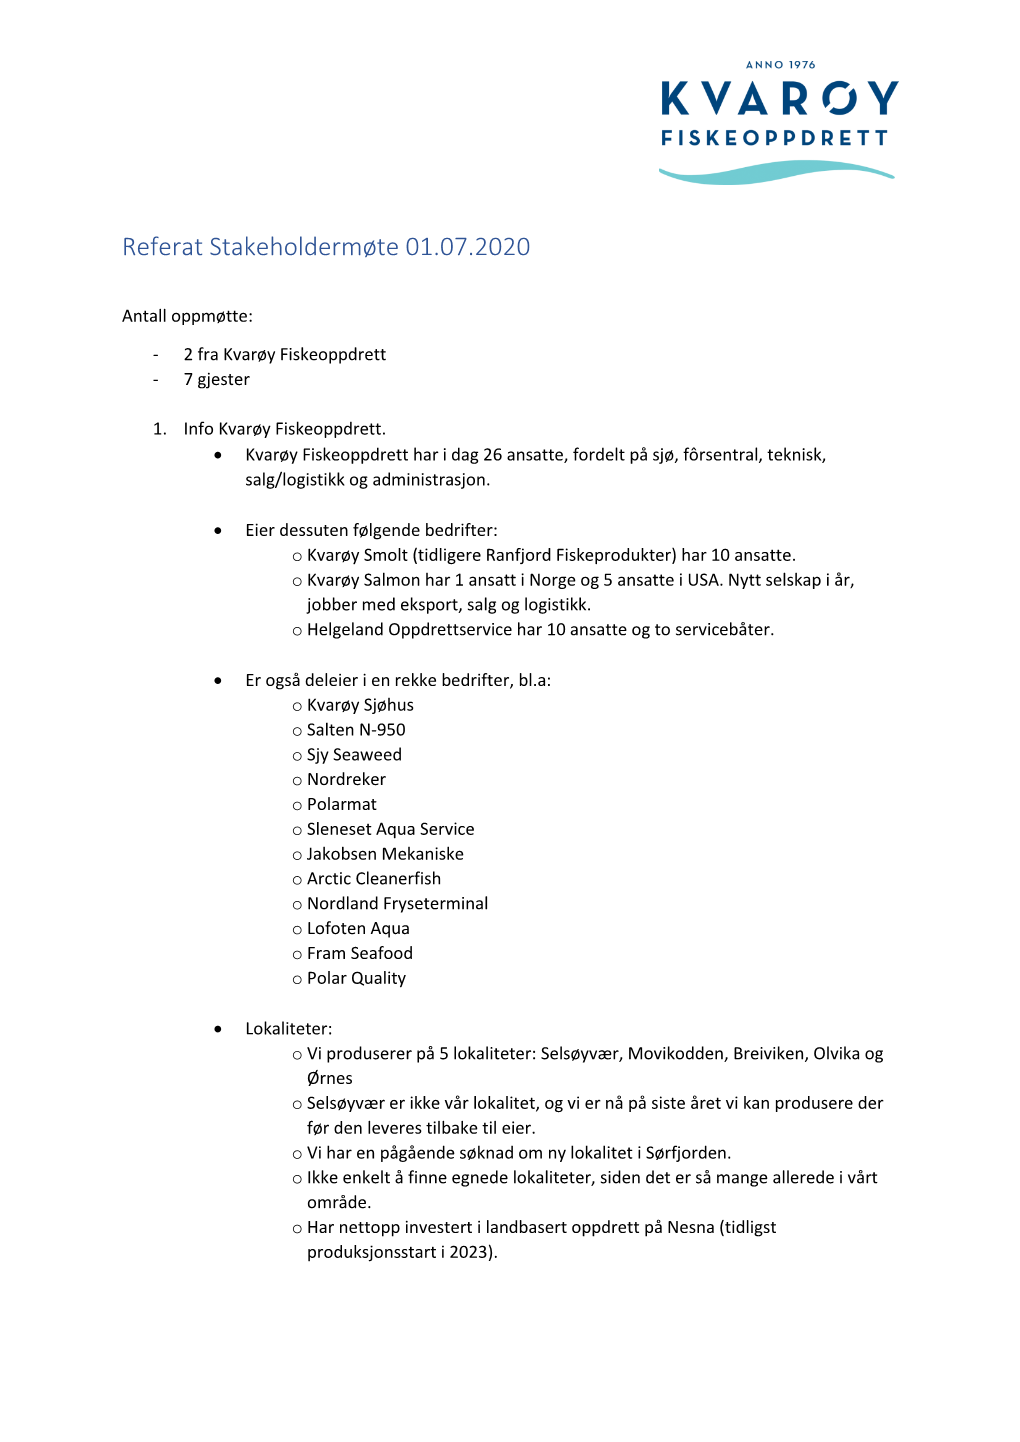 Referat Stakeholdermøte 01.07.2020